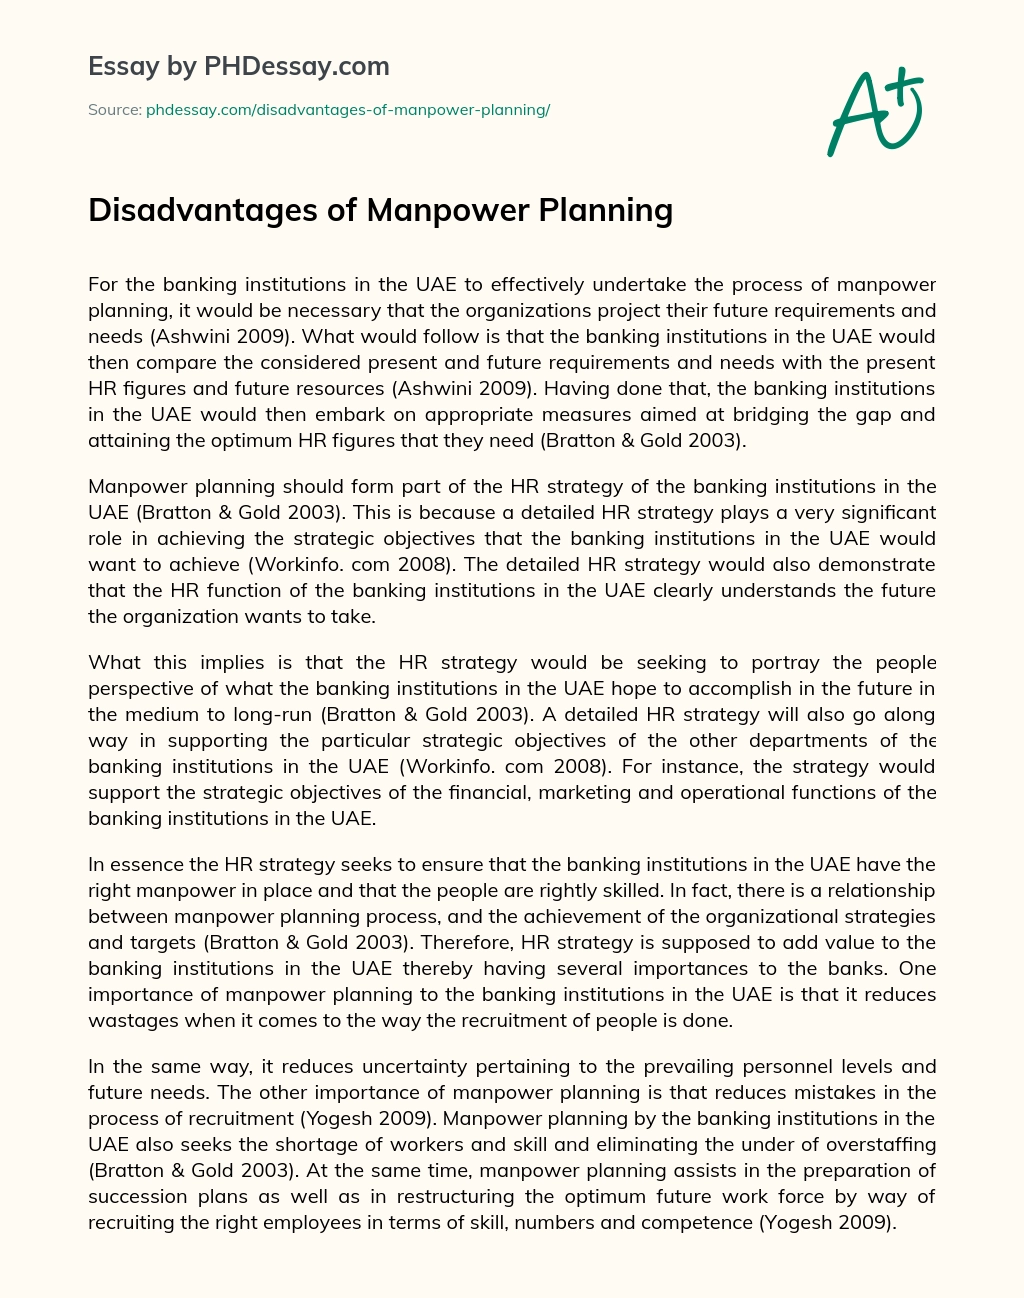 Disadvantages of Manpower Planning essay